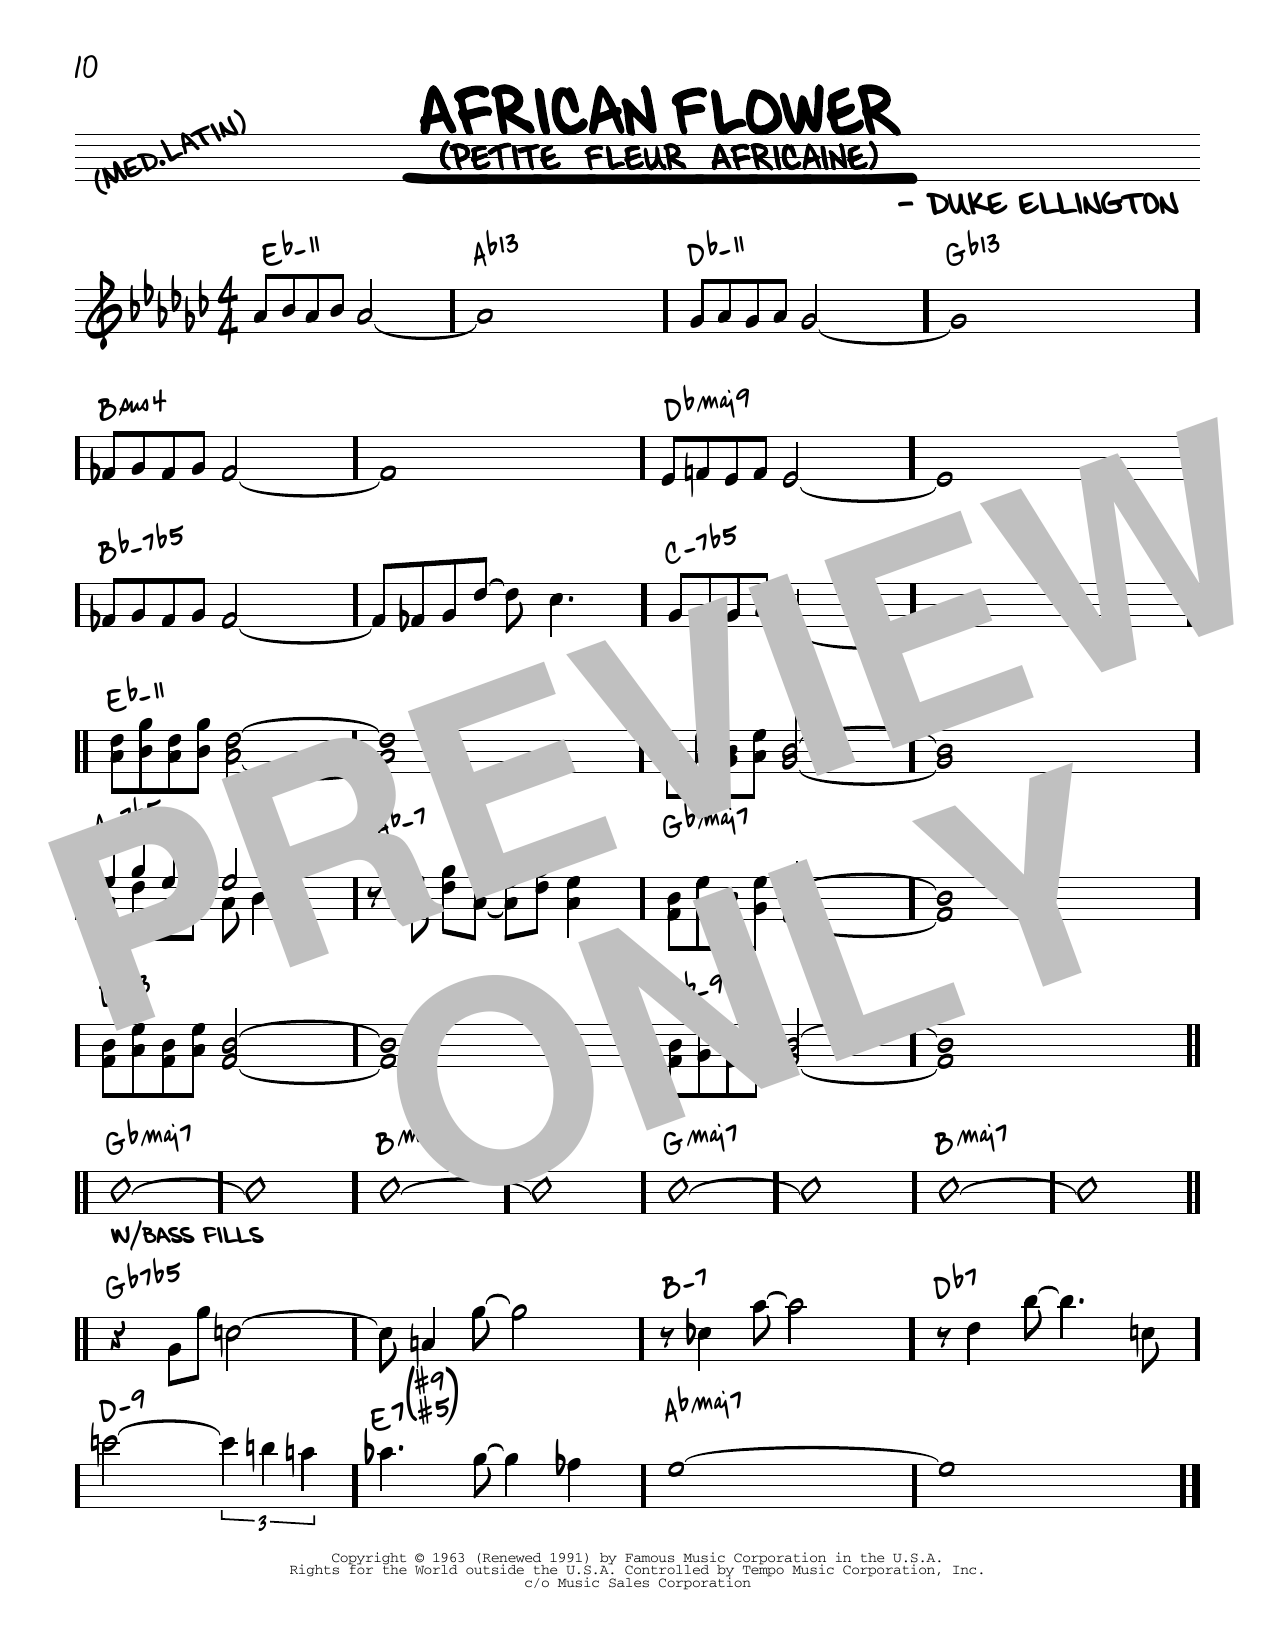 Duke Ellington African Flower (Petite Fleur Africaine) [Reharmonized version] (arr. Jack Grassel) Sheet Music Notes & Chords for Real Book – Melody & Chords - Download or Print PDF